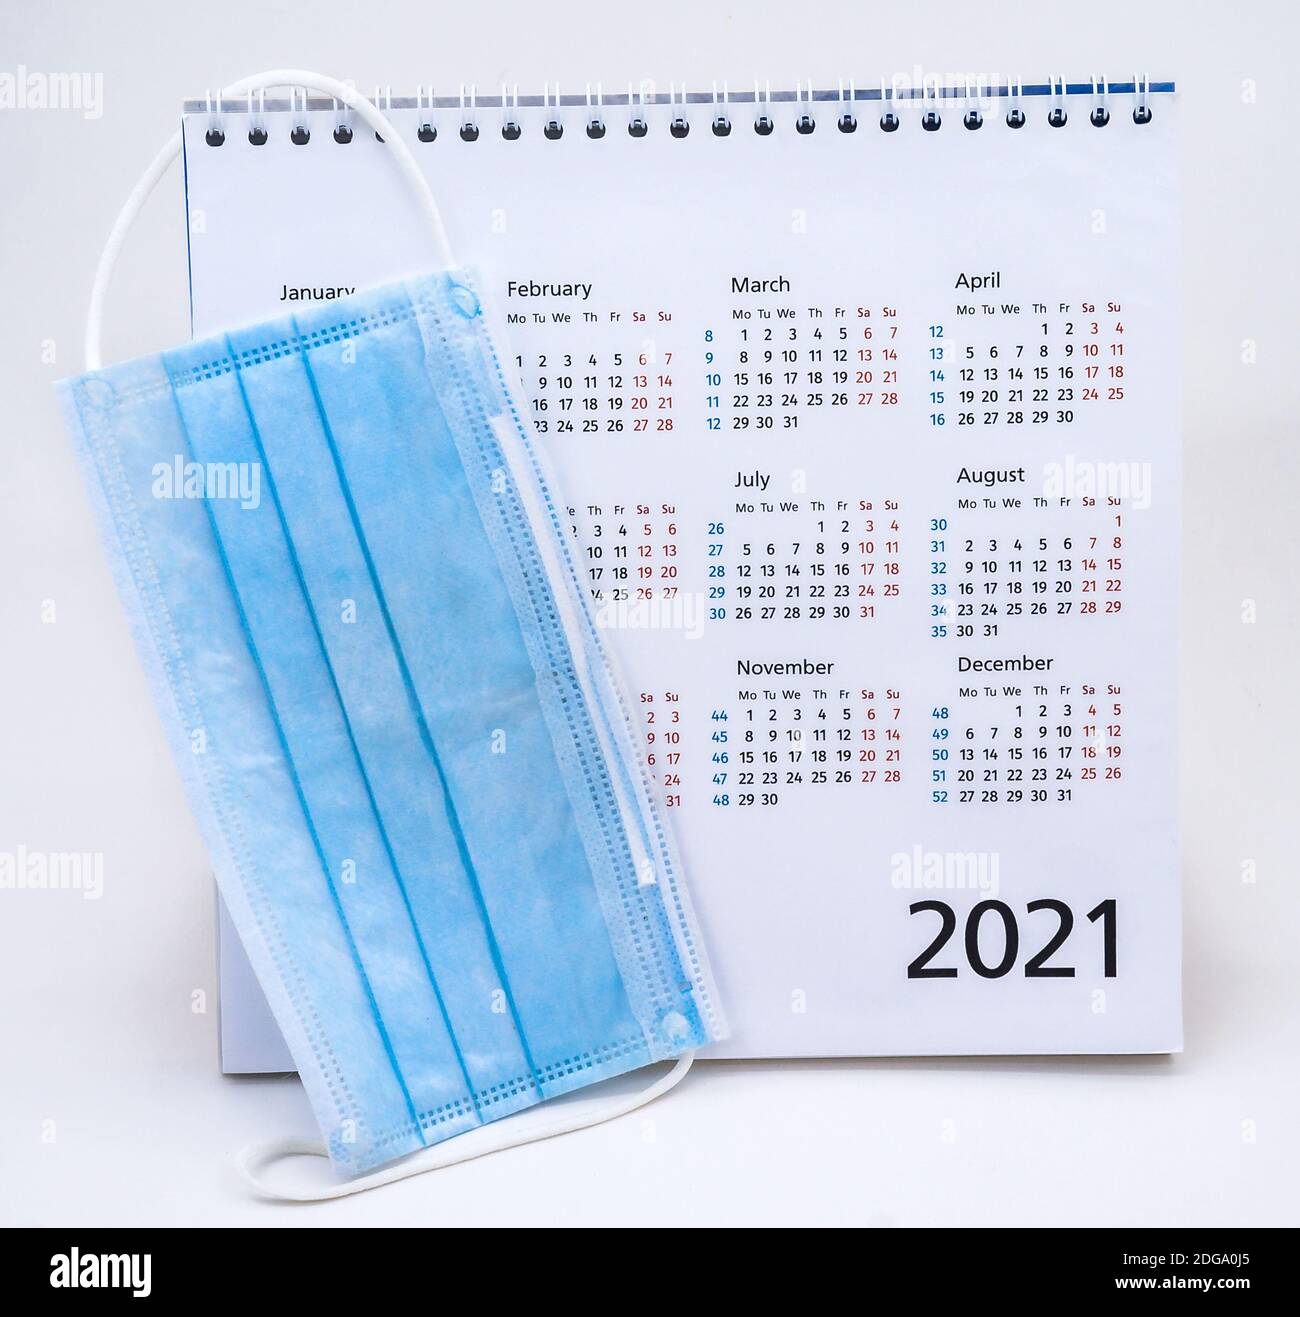 https://c8.alamy.com/comp/2DGA0J5/blue-disposable-mask-on-the-calendar-medical-face-mask-and-calendar-for-2021-2DGA0J5.jpg